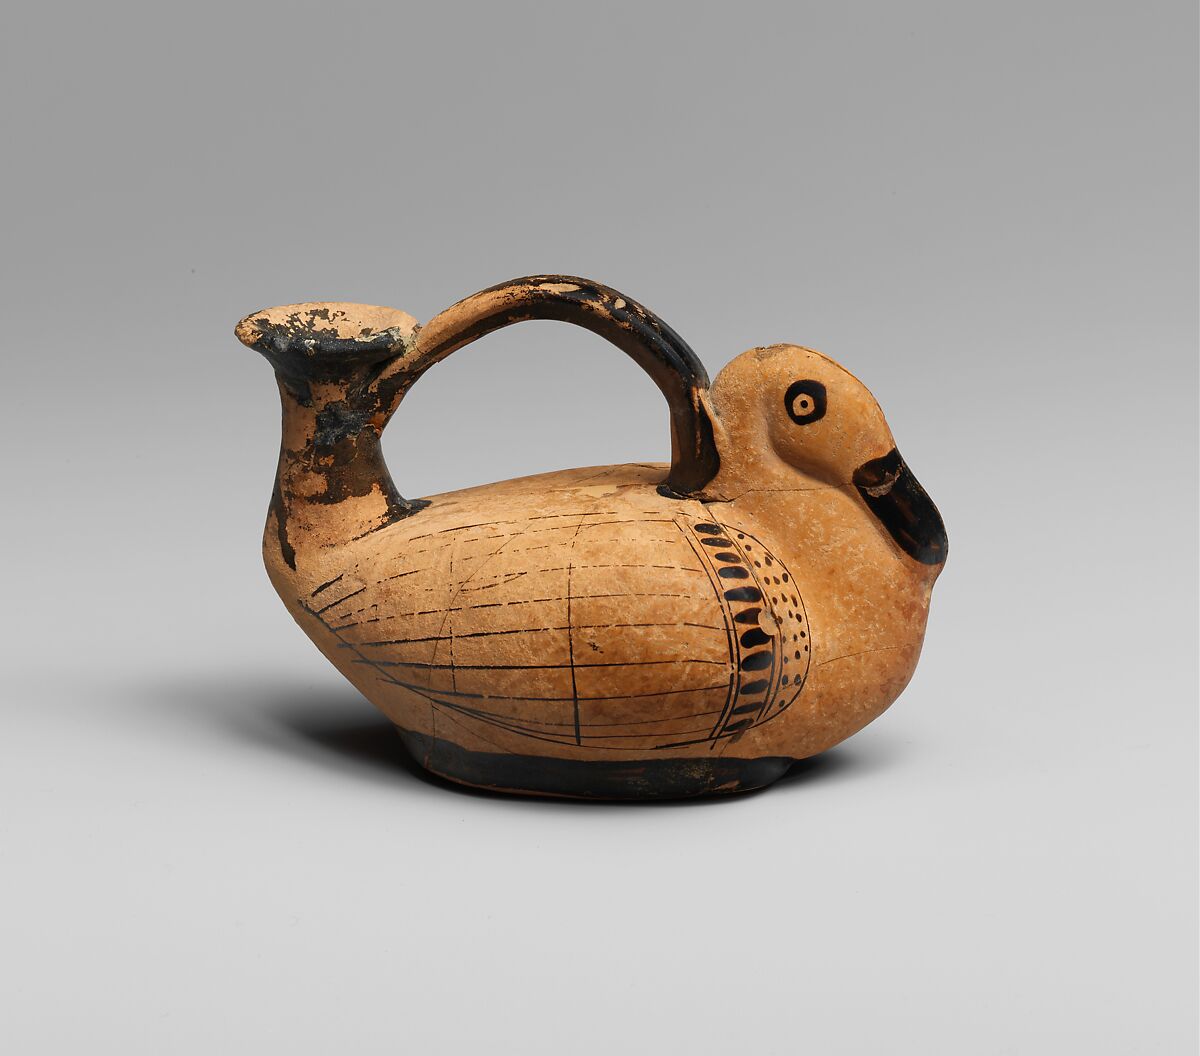 Terracotta askos in the form of a duck, Terracotta, Greek, Attic 